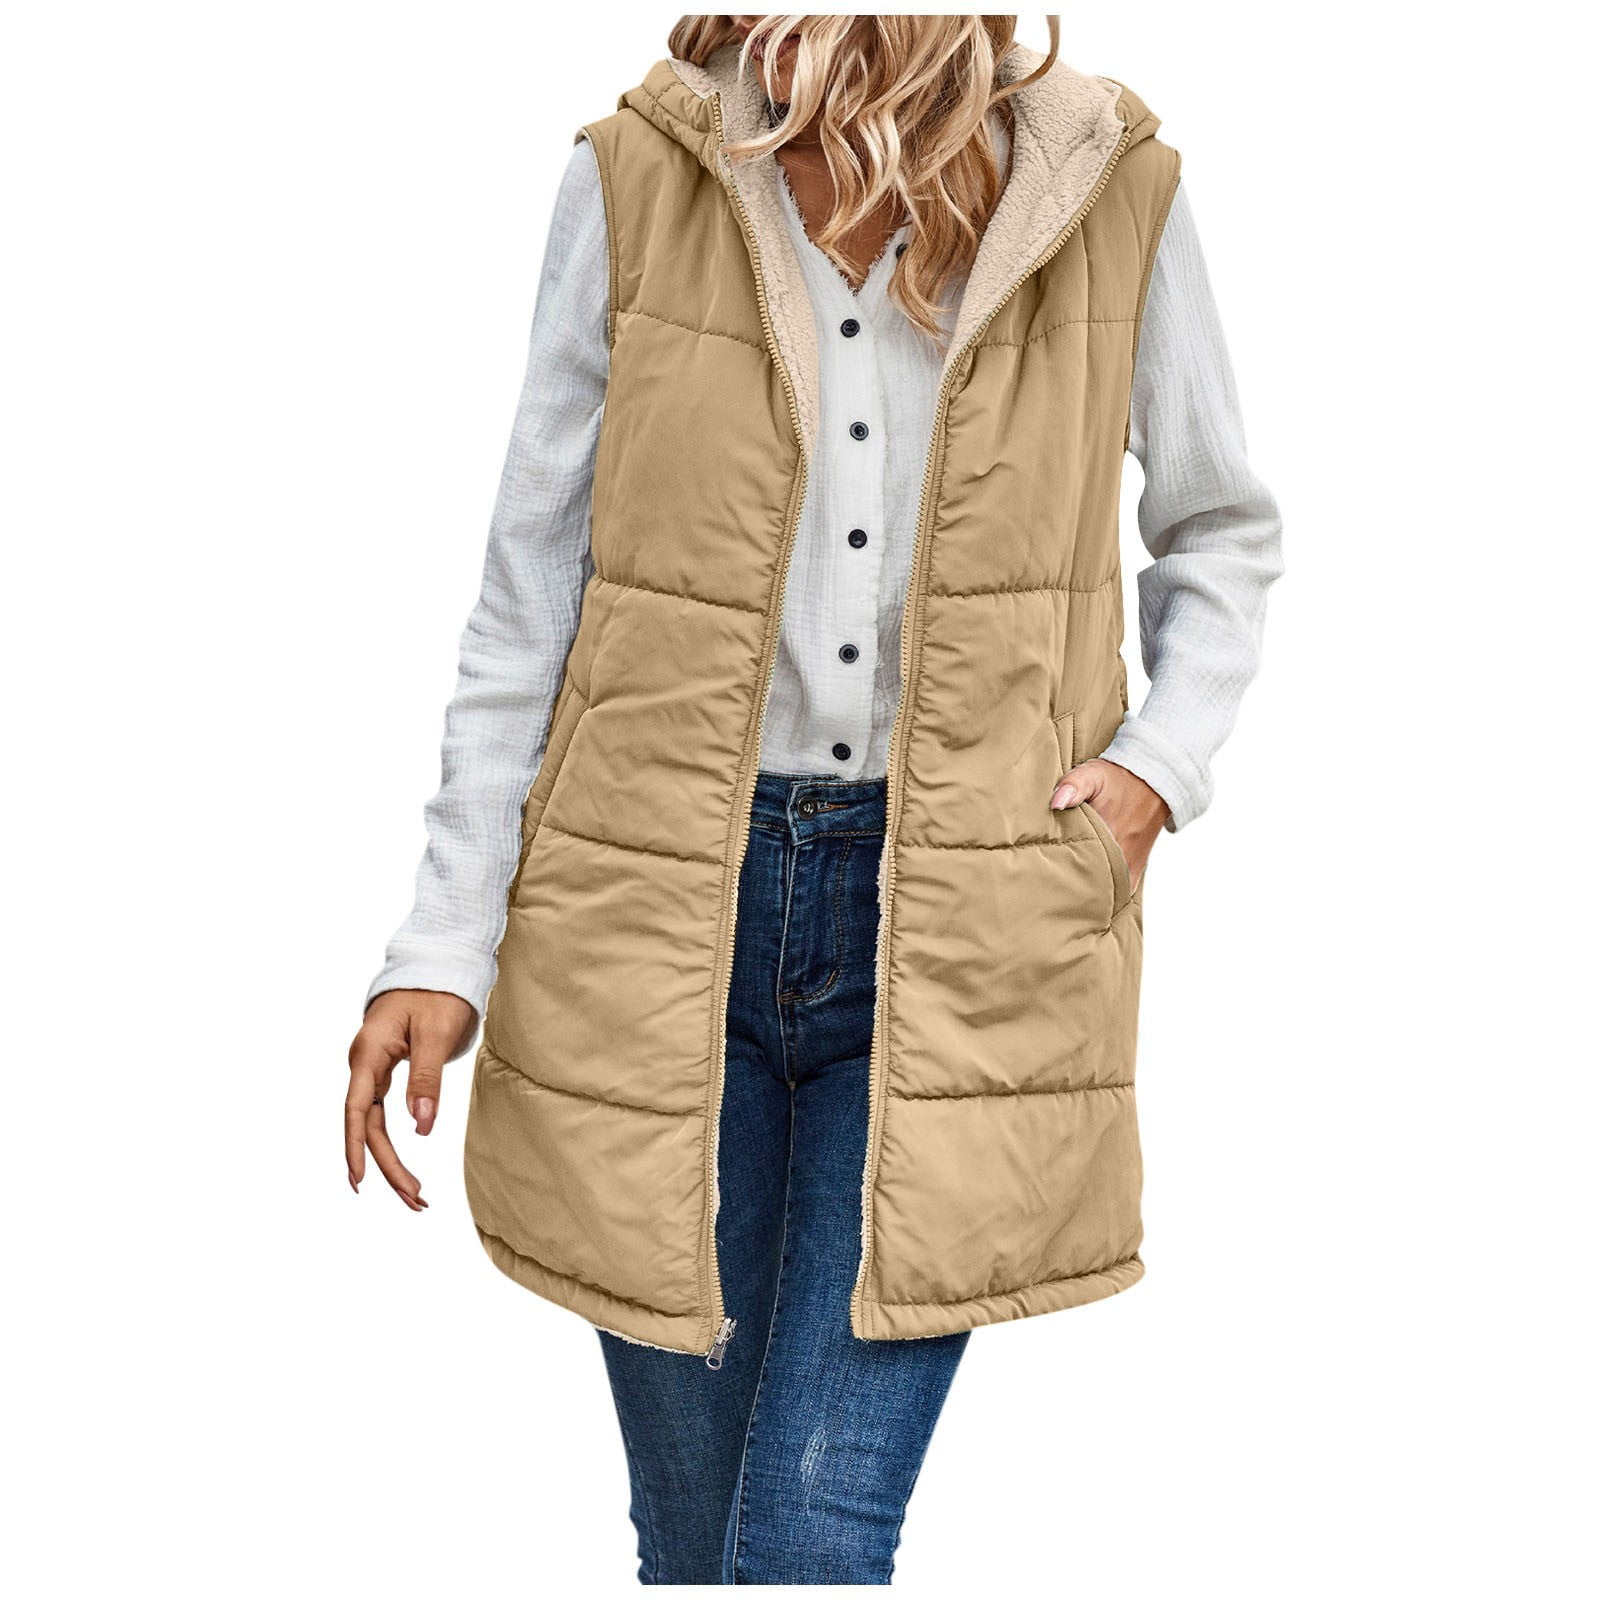 TQWQT Fall Reversible Vests for Women Sleeveless Fleece Jacket Zip Up  Hooded Vest Long Warm Winter Coat Comfy Outerwear Camel XL